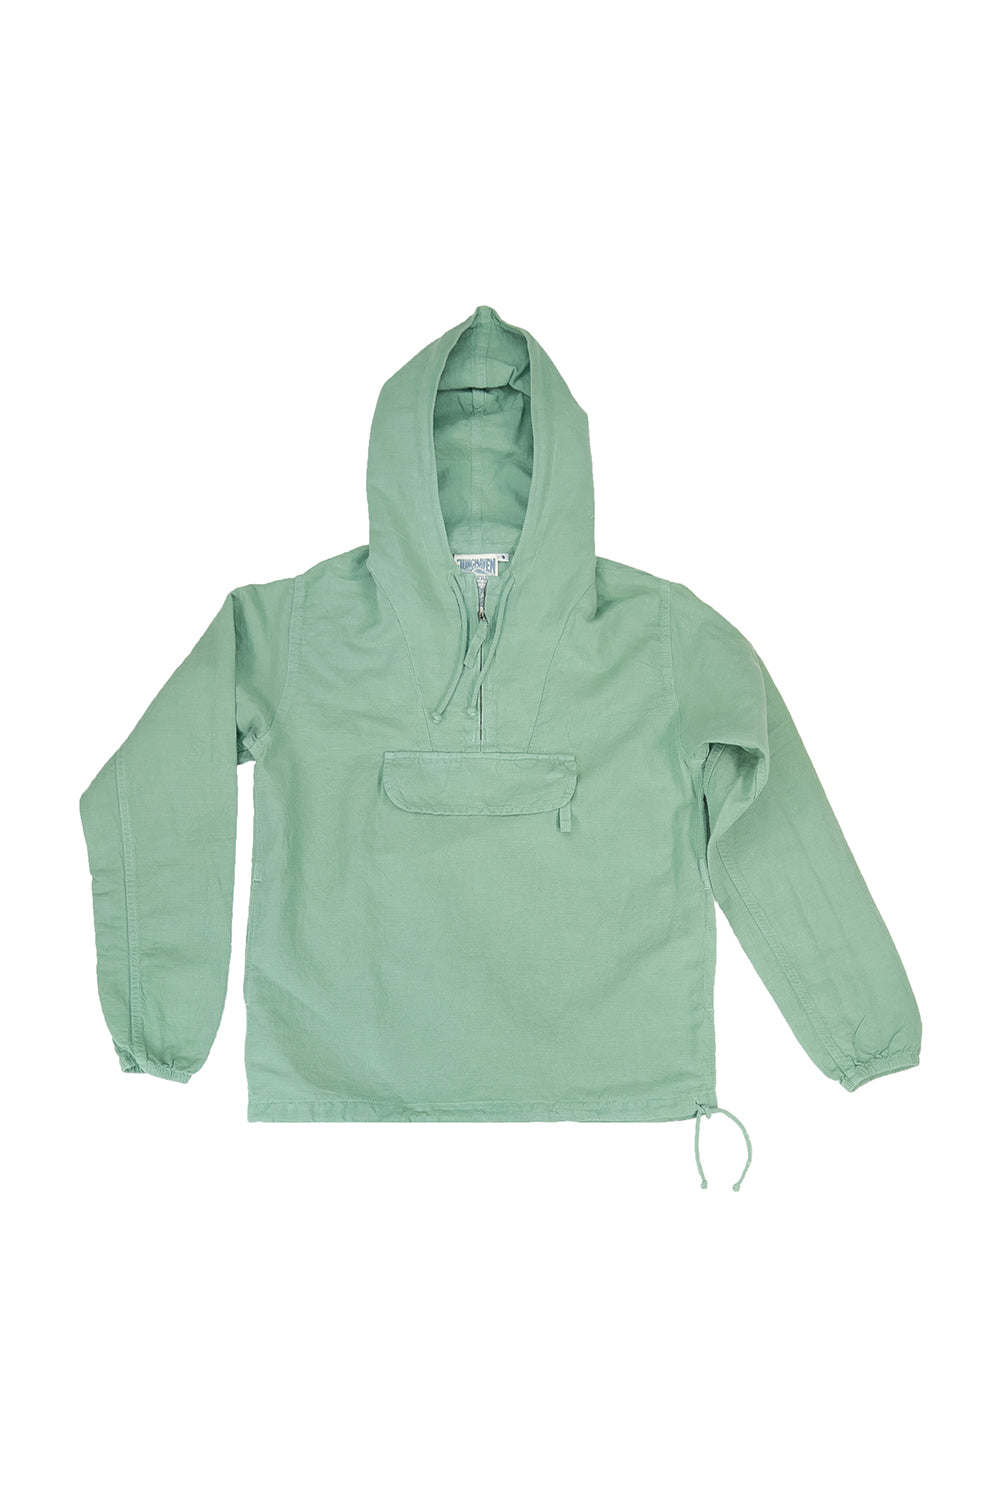 Shoreline Anorak Jacket | Jungmaven Hemp Clothing & Accessories / Color: Sage Green